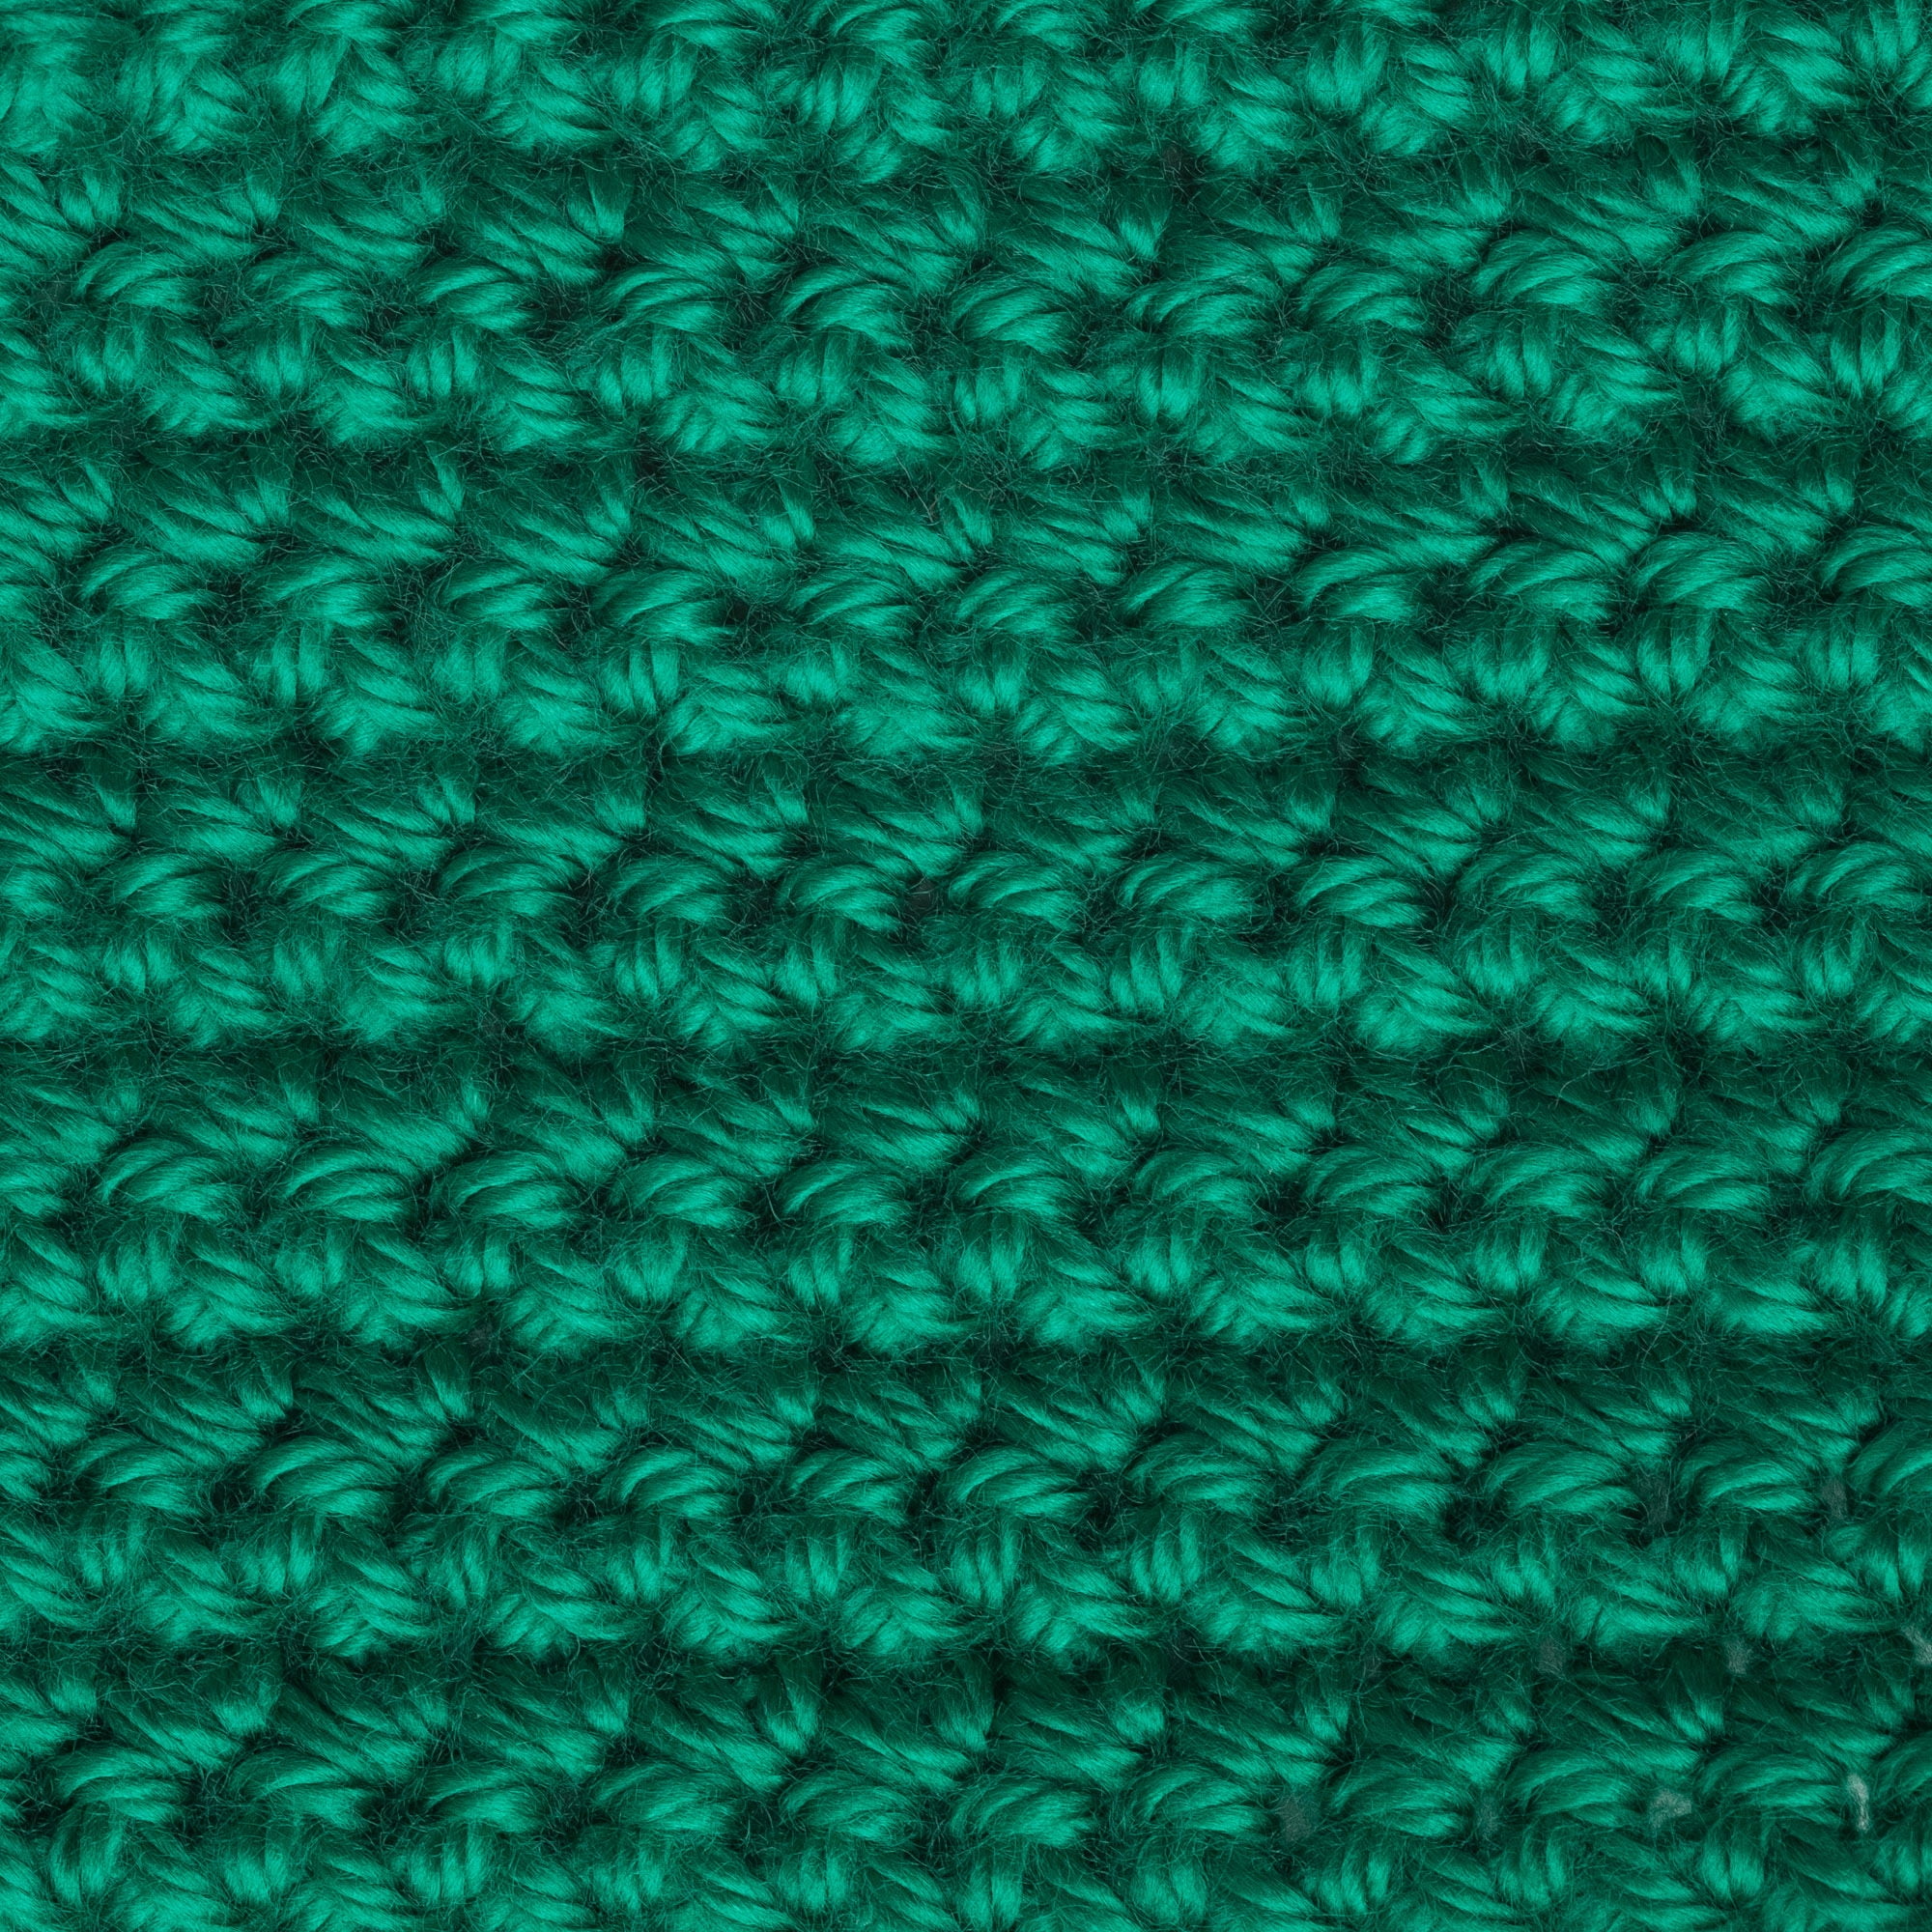 Caron Simply Soft Kelly Green Yarn - 3 Pack of 170g/6oz - Acrylic - 4  Medium (Worsted) - 315 Yards - Knitting, Crocheting & Crafts